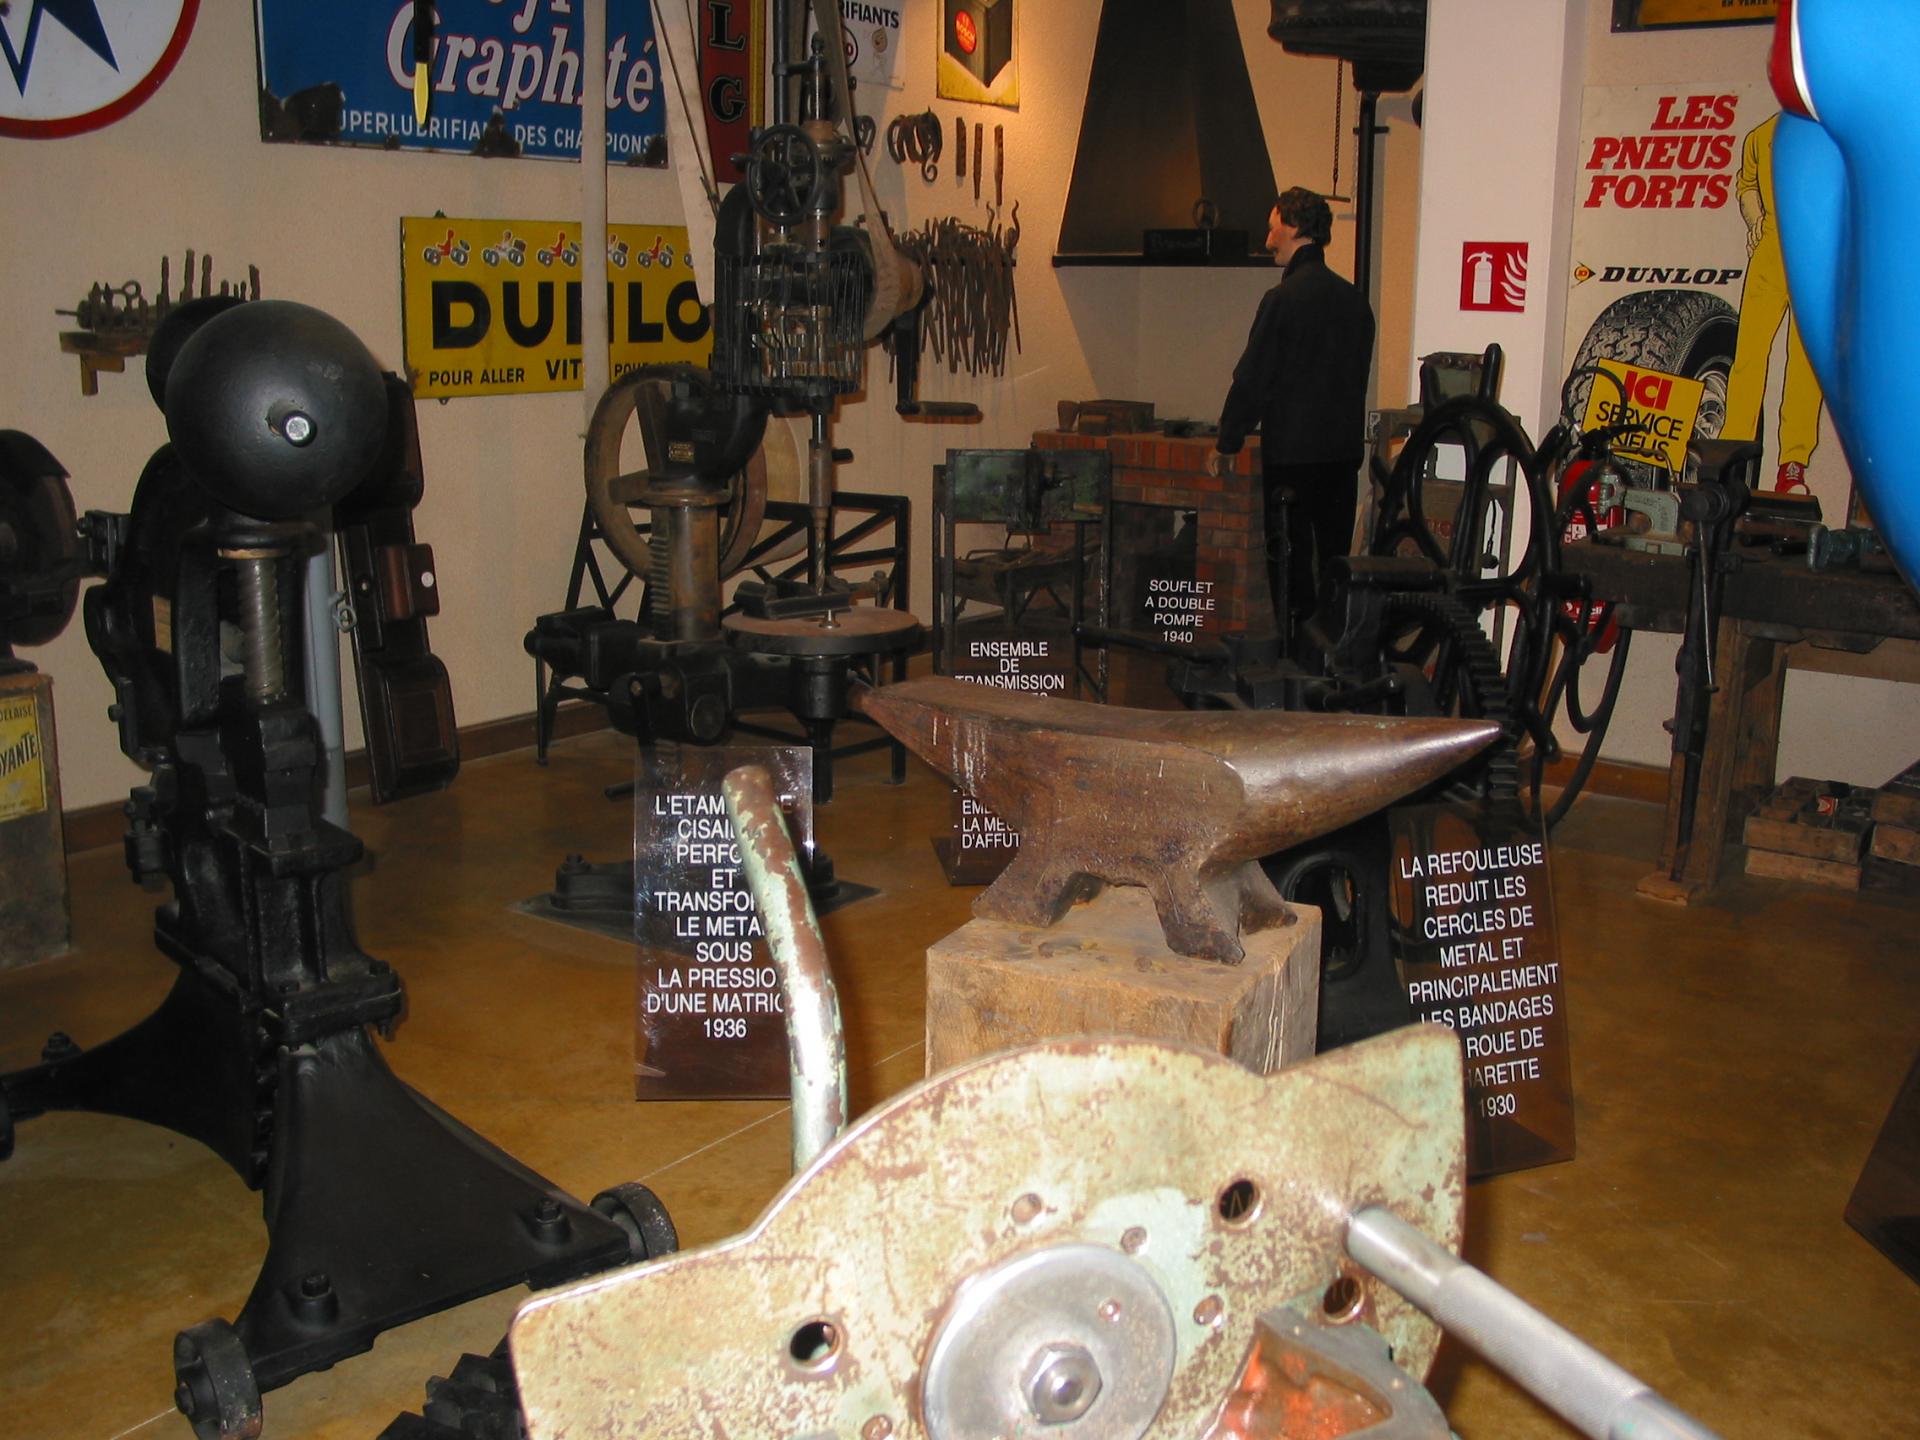 Musée automobile de Lohéac